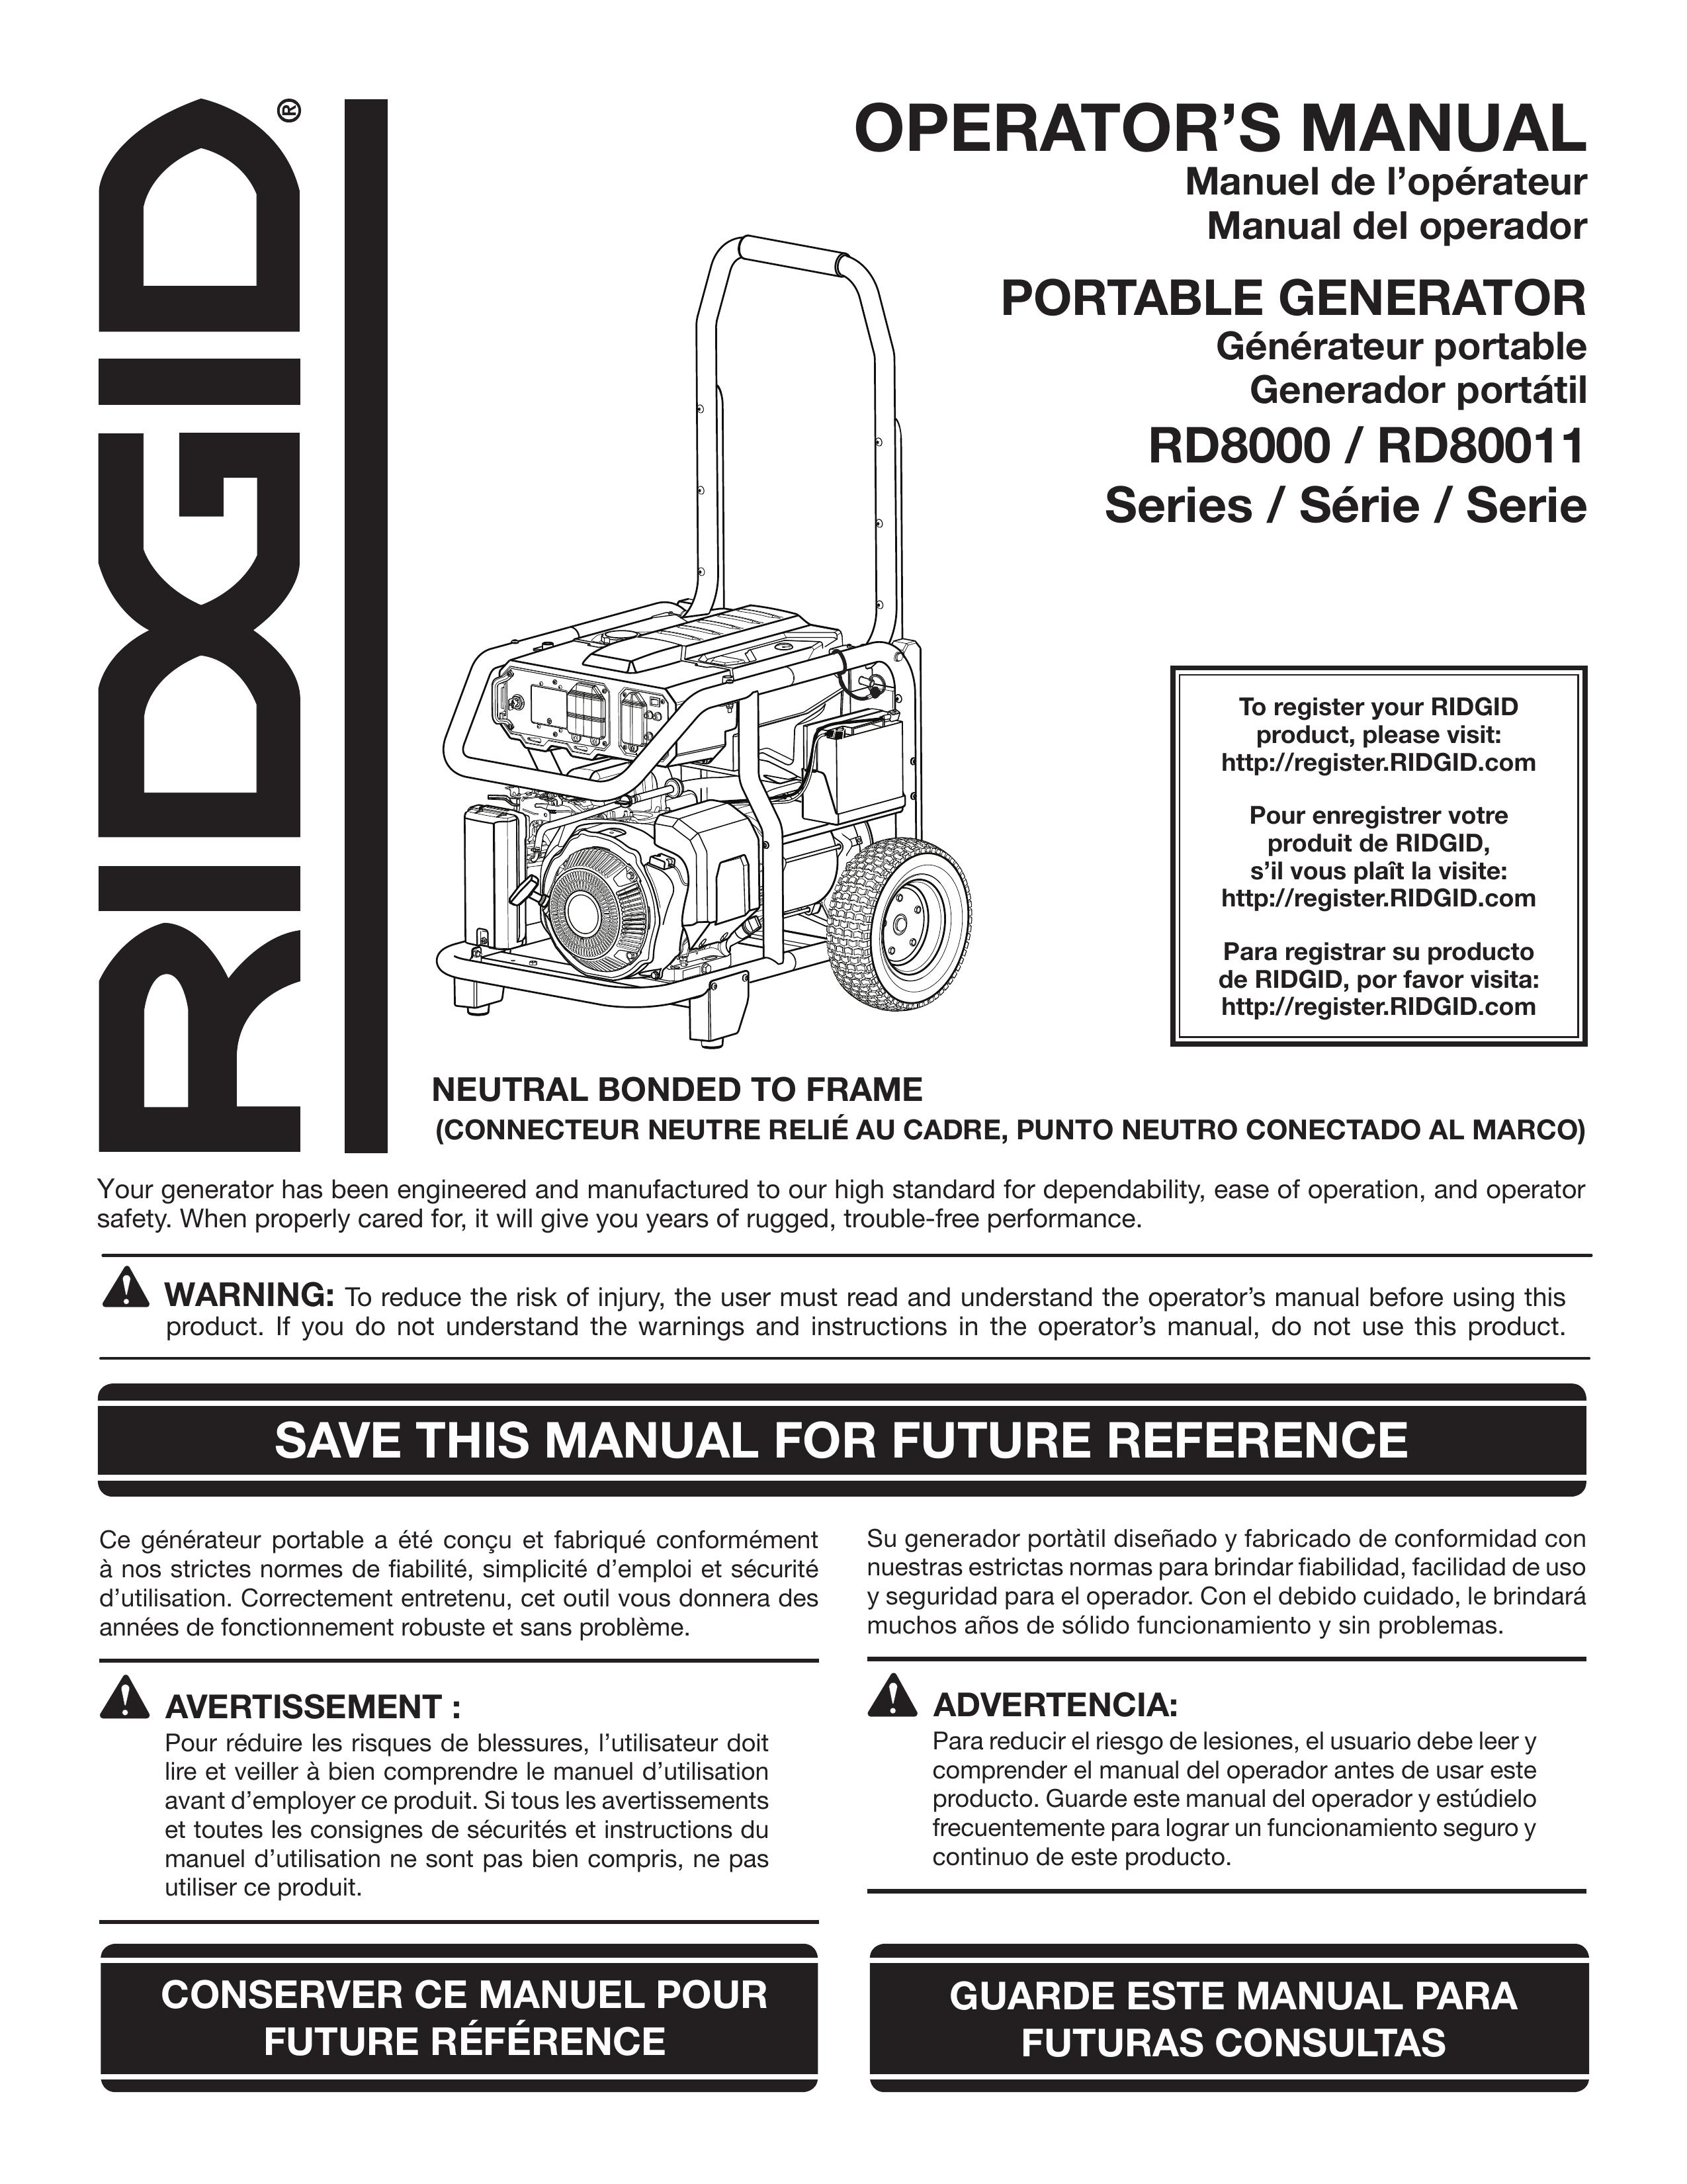 RIDGID RD8000 Portable Generator User Manual